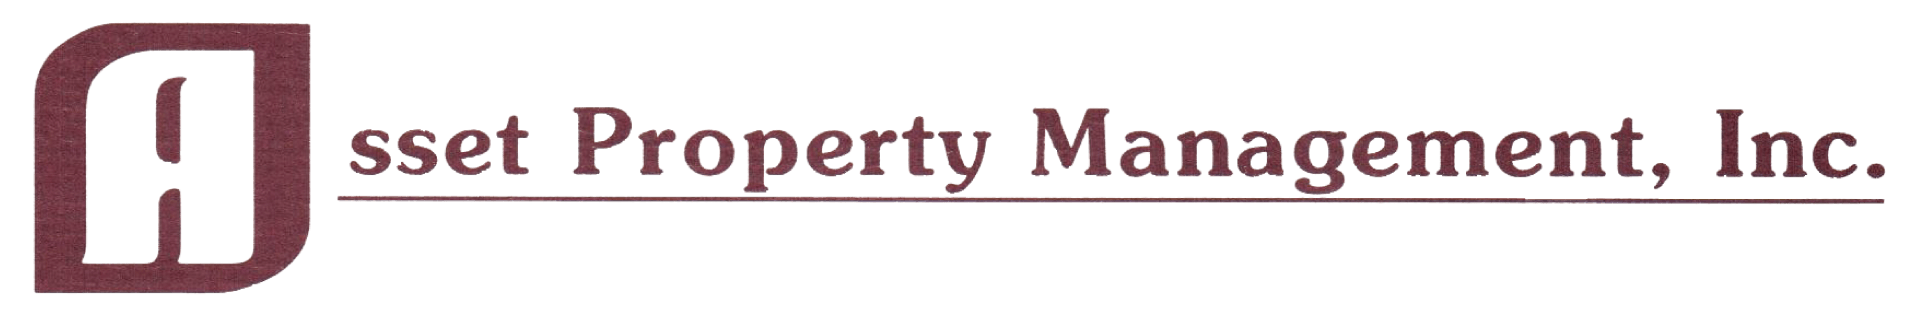 Asset Property Management, Inc Logo